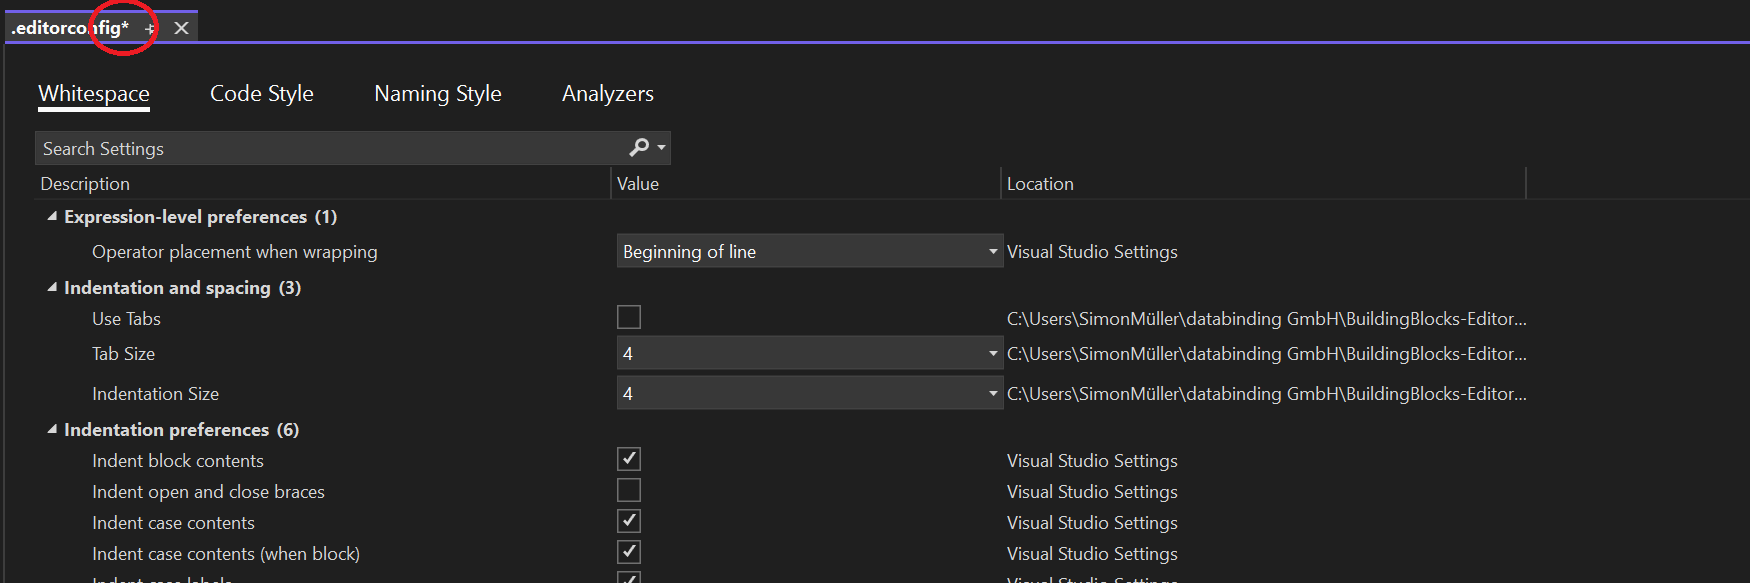 Visual Studio Editor